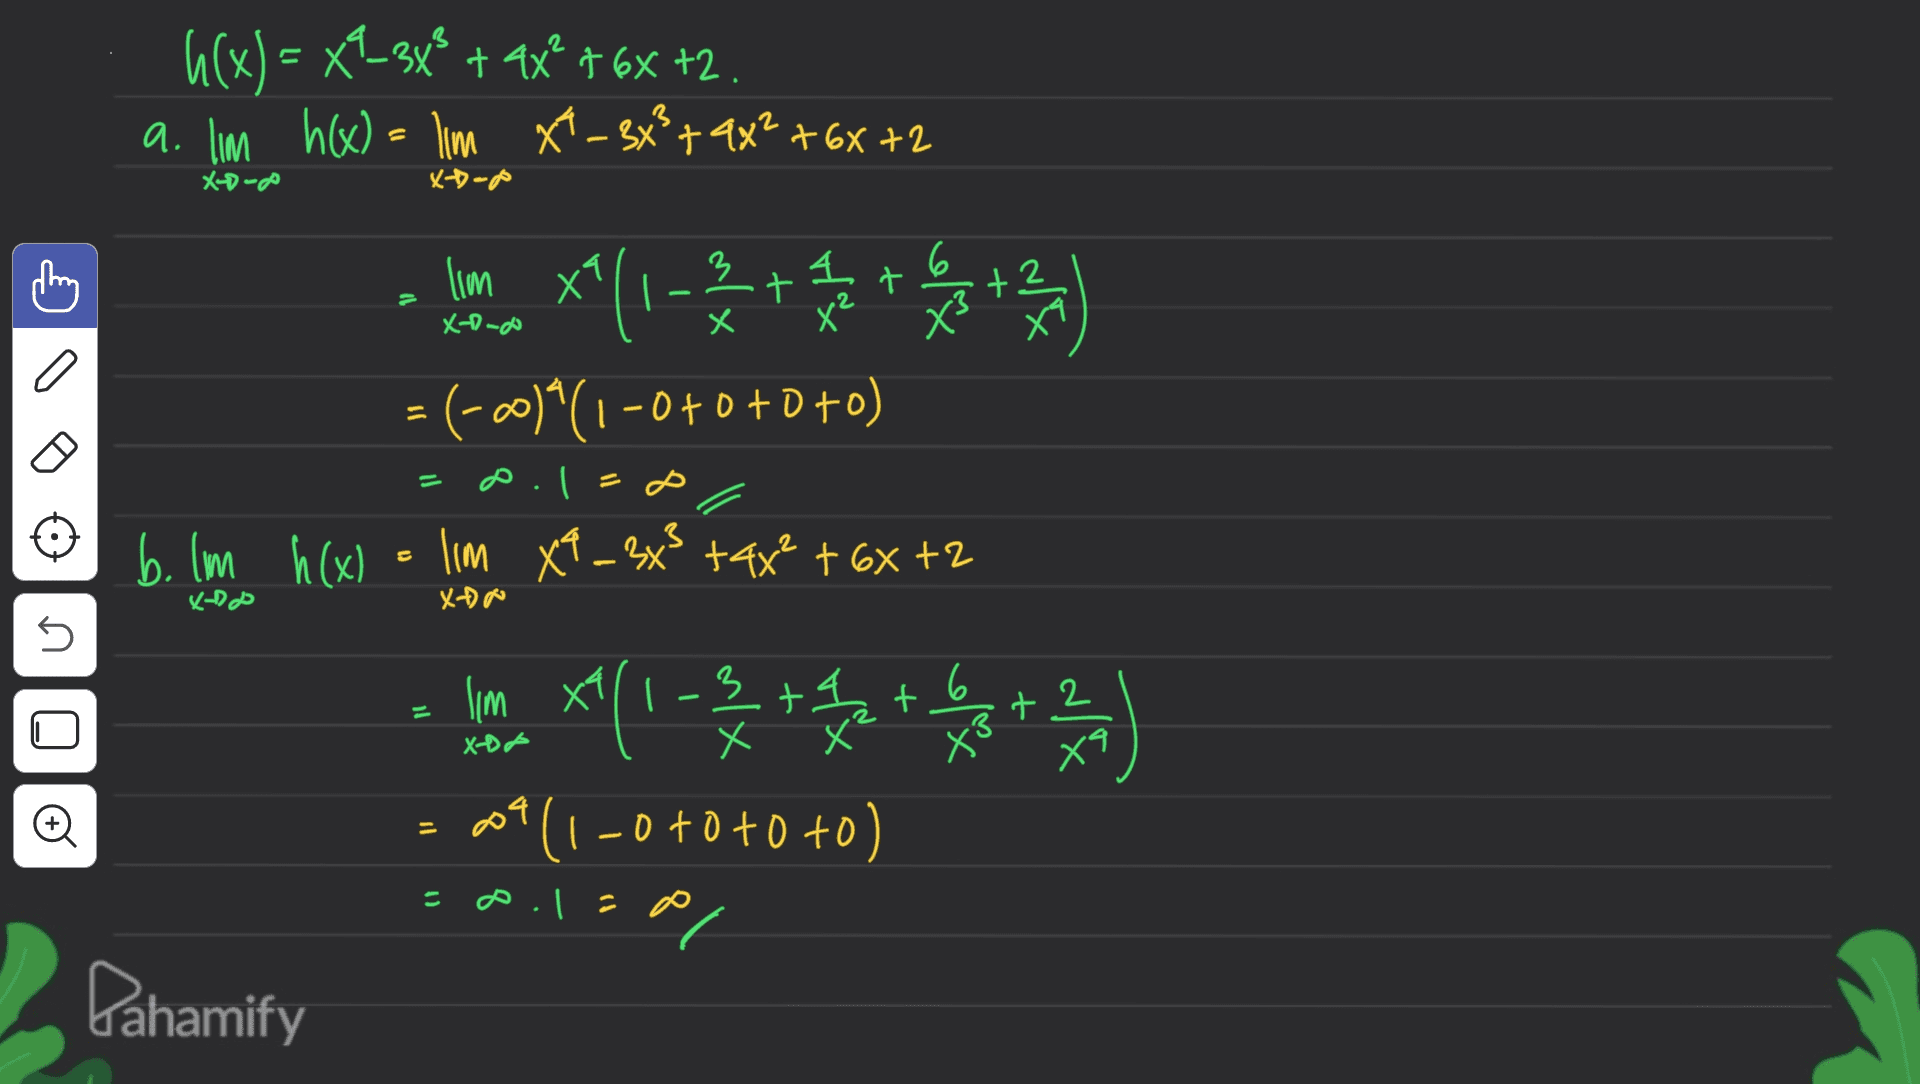 h(x) = x?_3x® + 9x16x +2. a. lim h(x) = lim x*- 3x²+4x²+6x +2 X0-00 X-Dodo lim x^(1 - 2 + 1 2 + 3 + 2/4 X-o-o = (-00)^(1-0+0+0+0) = 2.1 = D. b. lm h(x) = lim X9 _ 3x3+4x² + 6x +2 X-Do Xo 5 lim X1 *(1-32 + 1 2 + 3 + 2/4 * W*0 (1-0+0+0+0) X-DP o 2.12 el Pahamify 